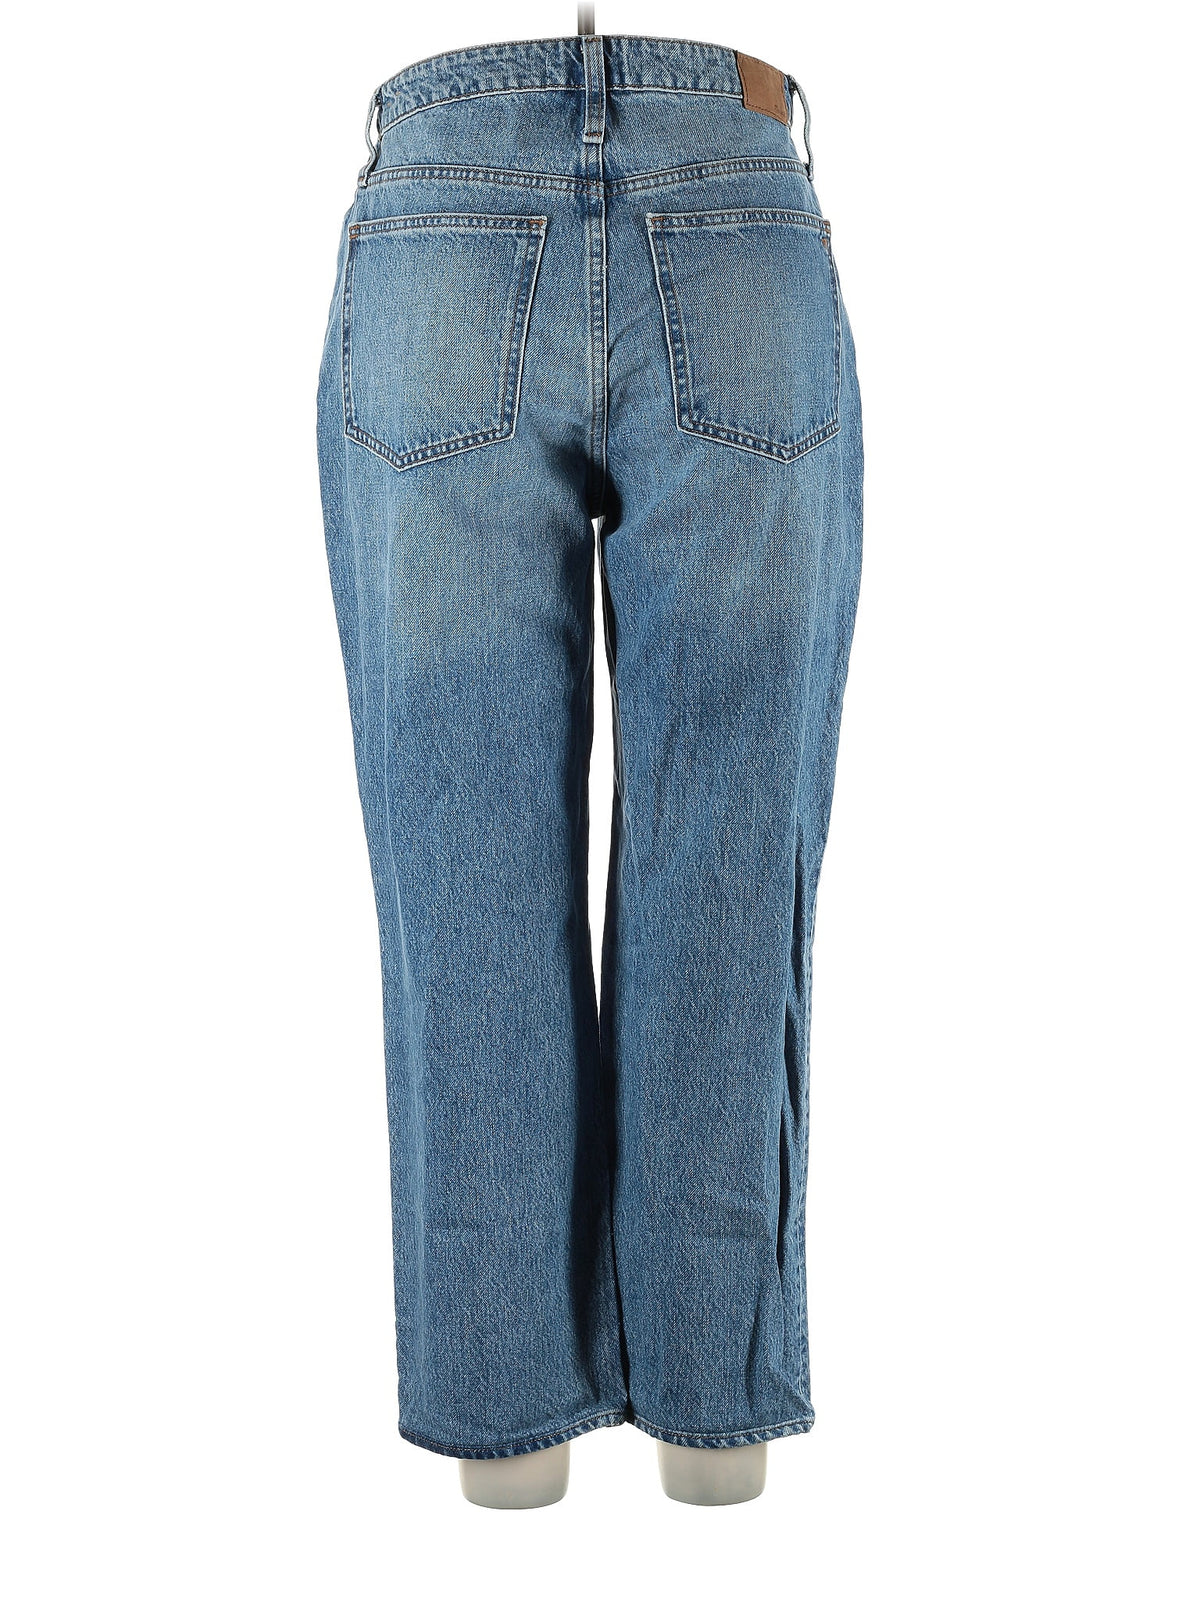 High-Rise Boyjeans Jeans in Medium Wash waist size - 30